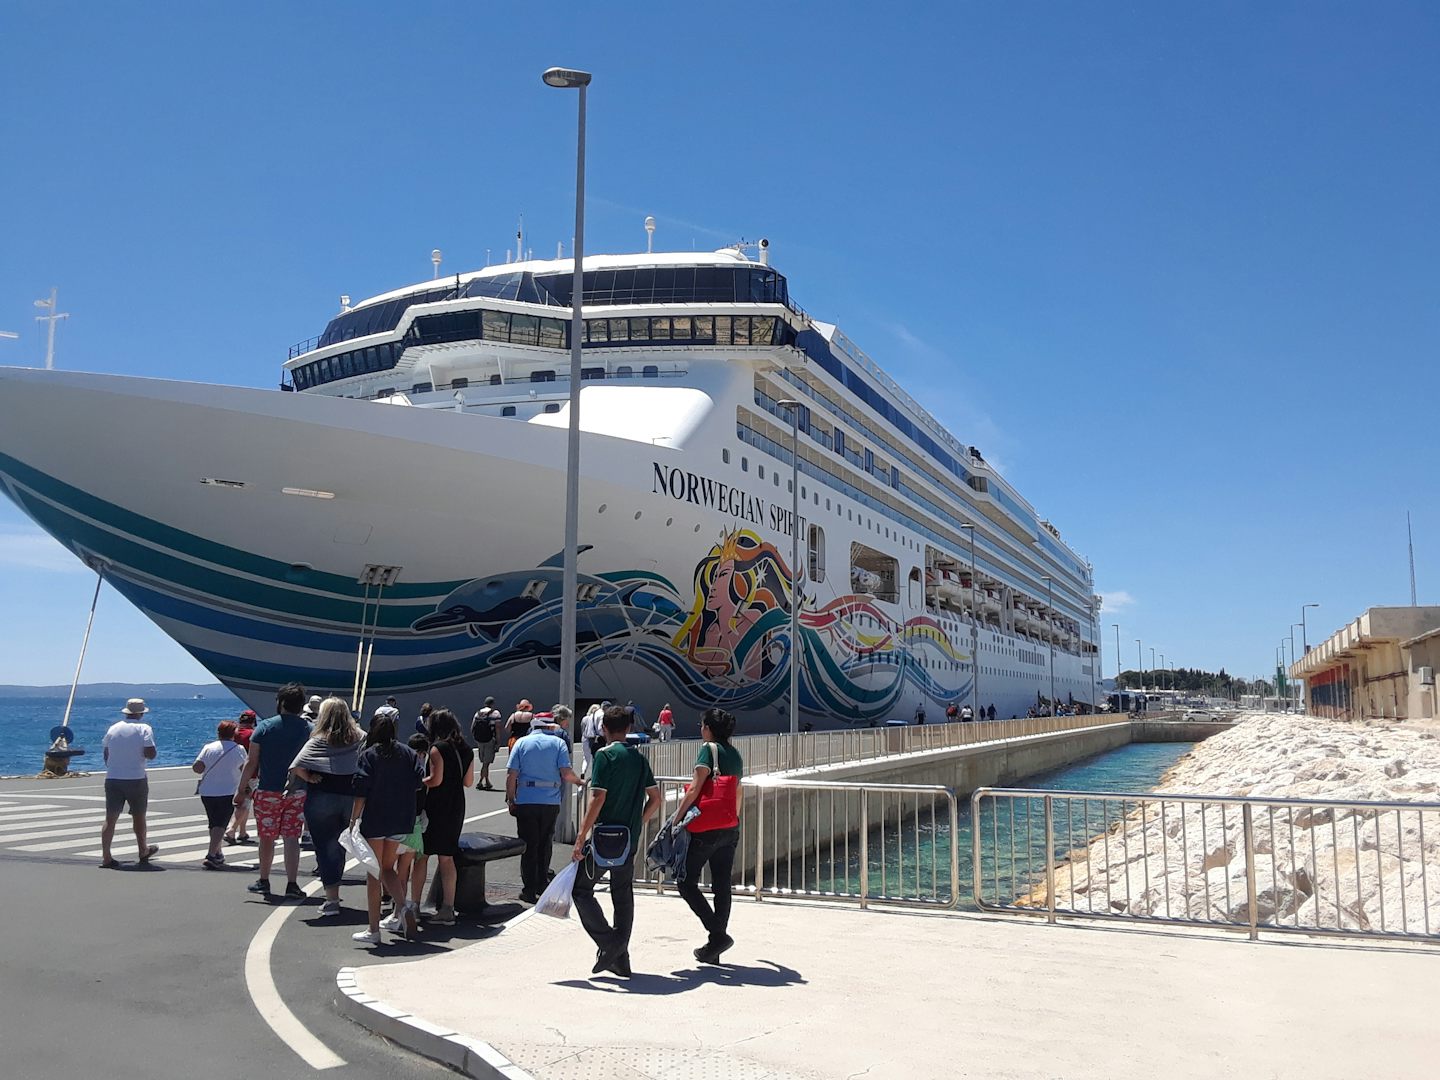 NCL spirit docked at Split, Croatia.